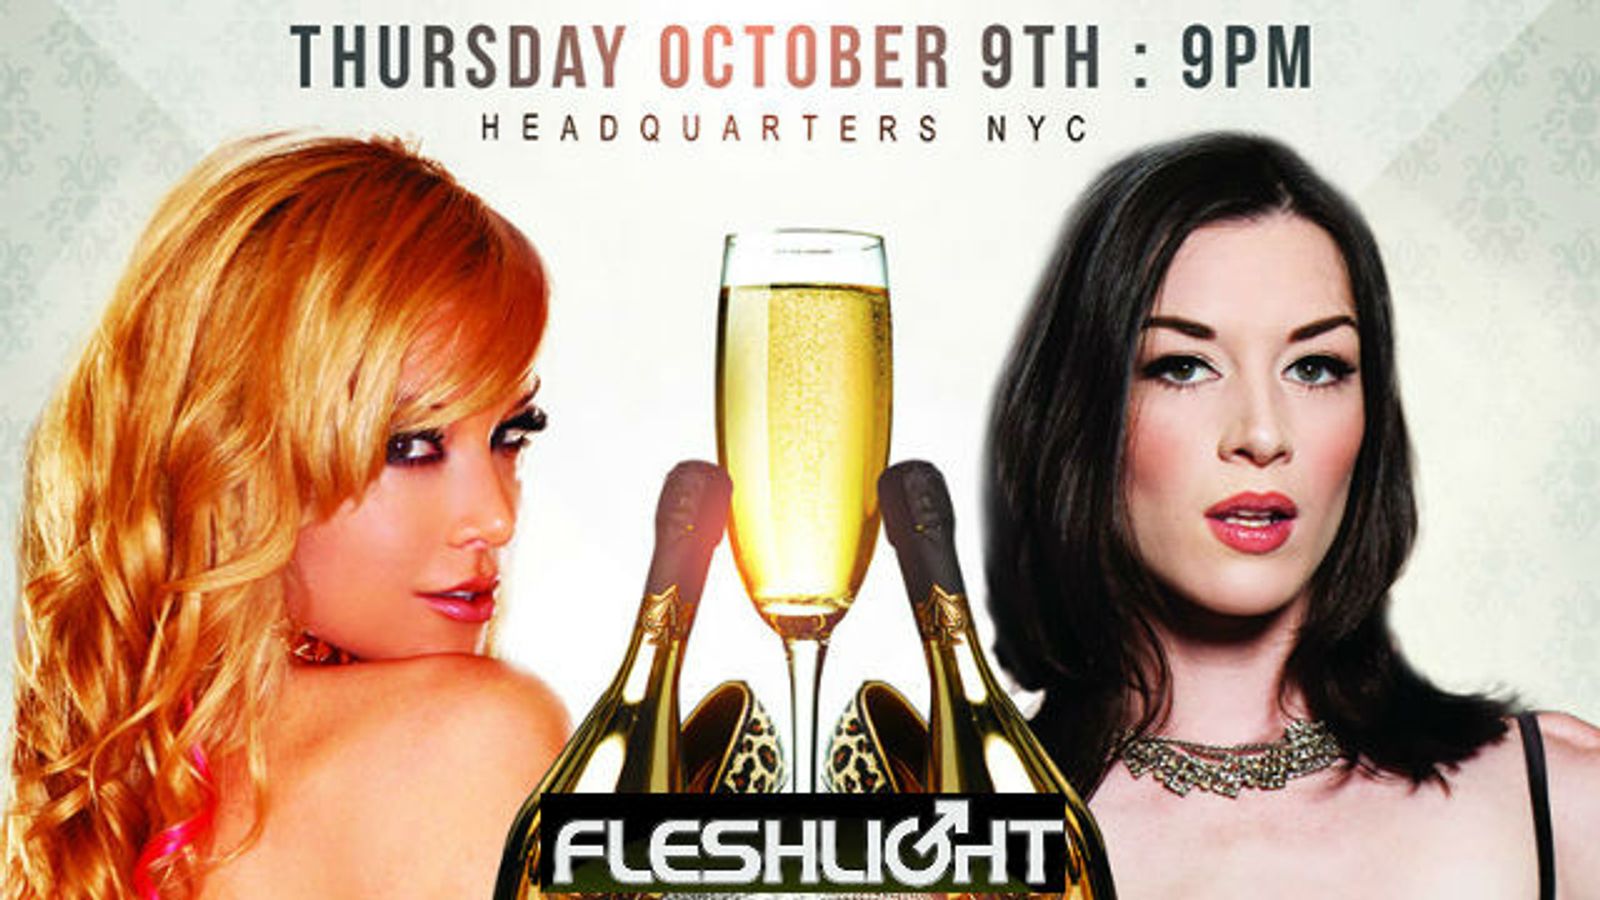 Fleshlight Celebrates Headquarters’ 9th Anniversary Party Oct. 9